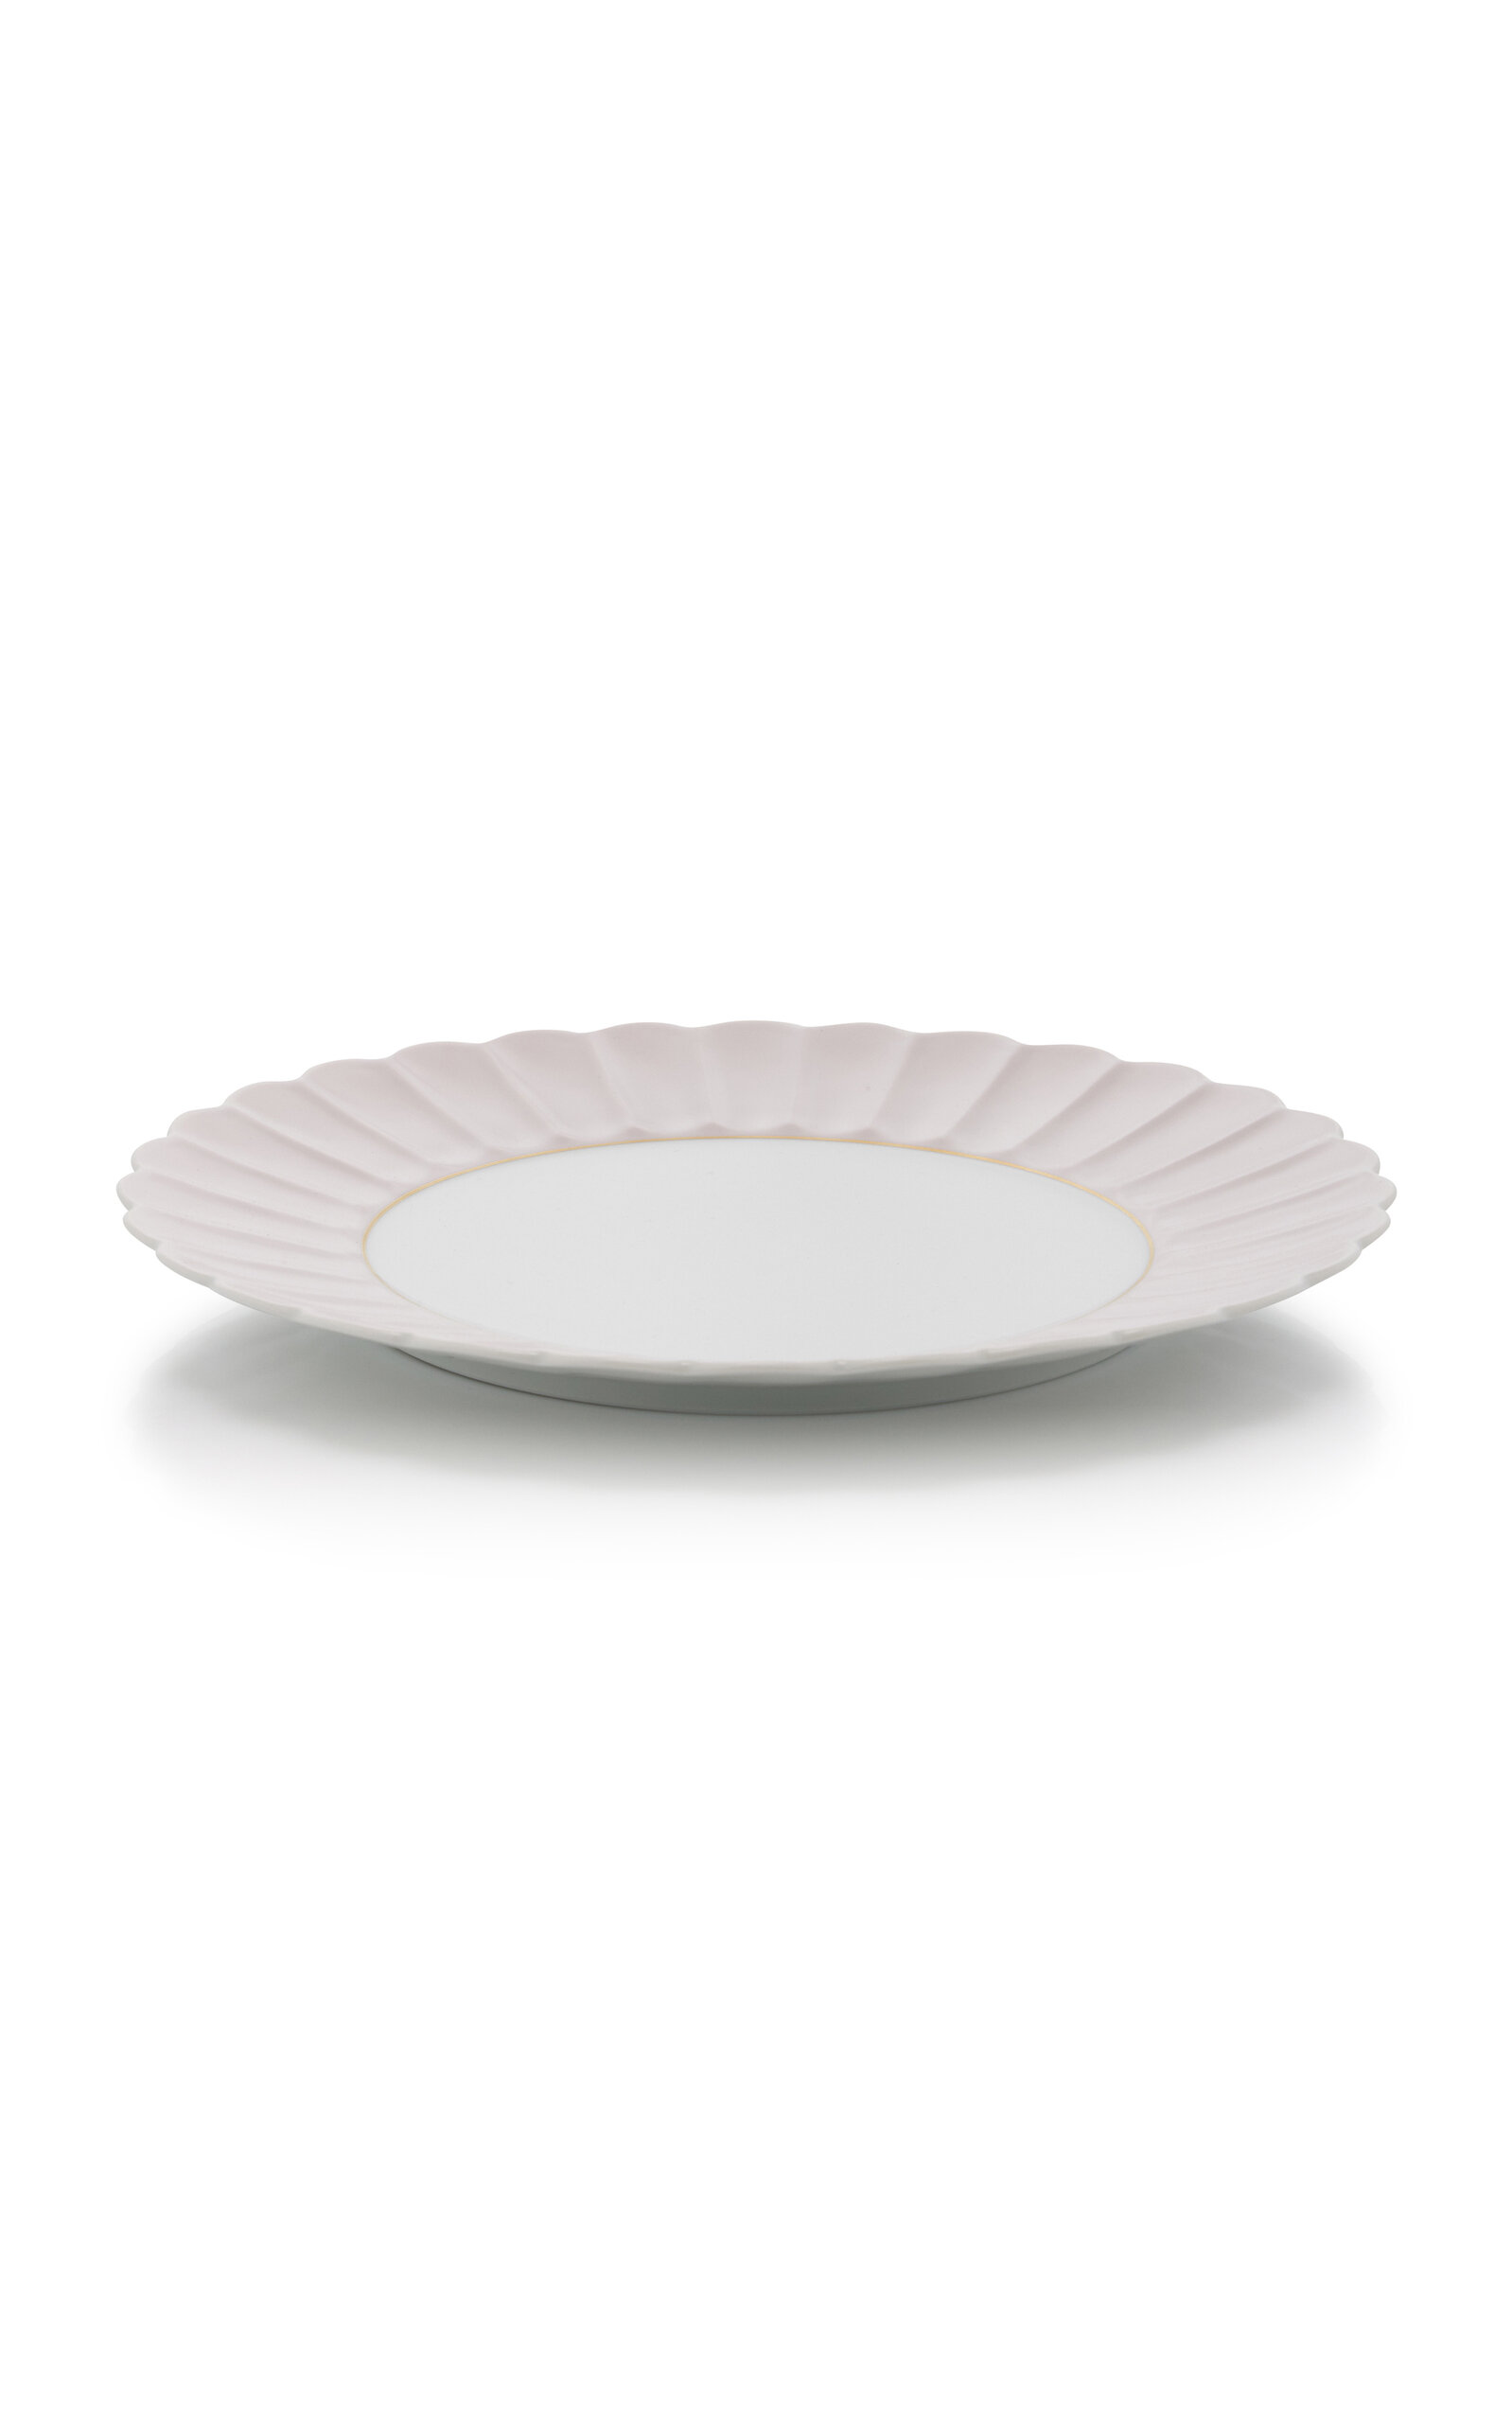 Augarten Wien Porcelain Dinner Plate In White